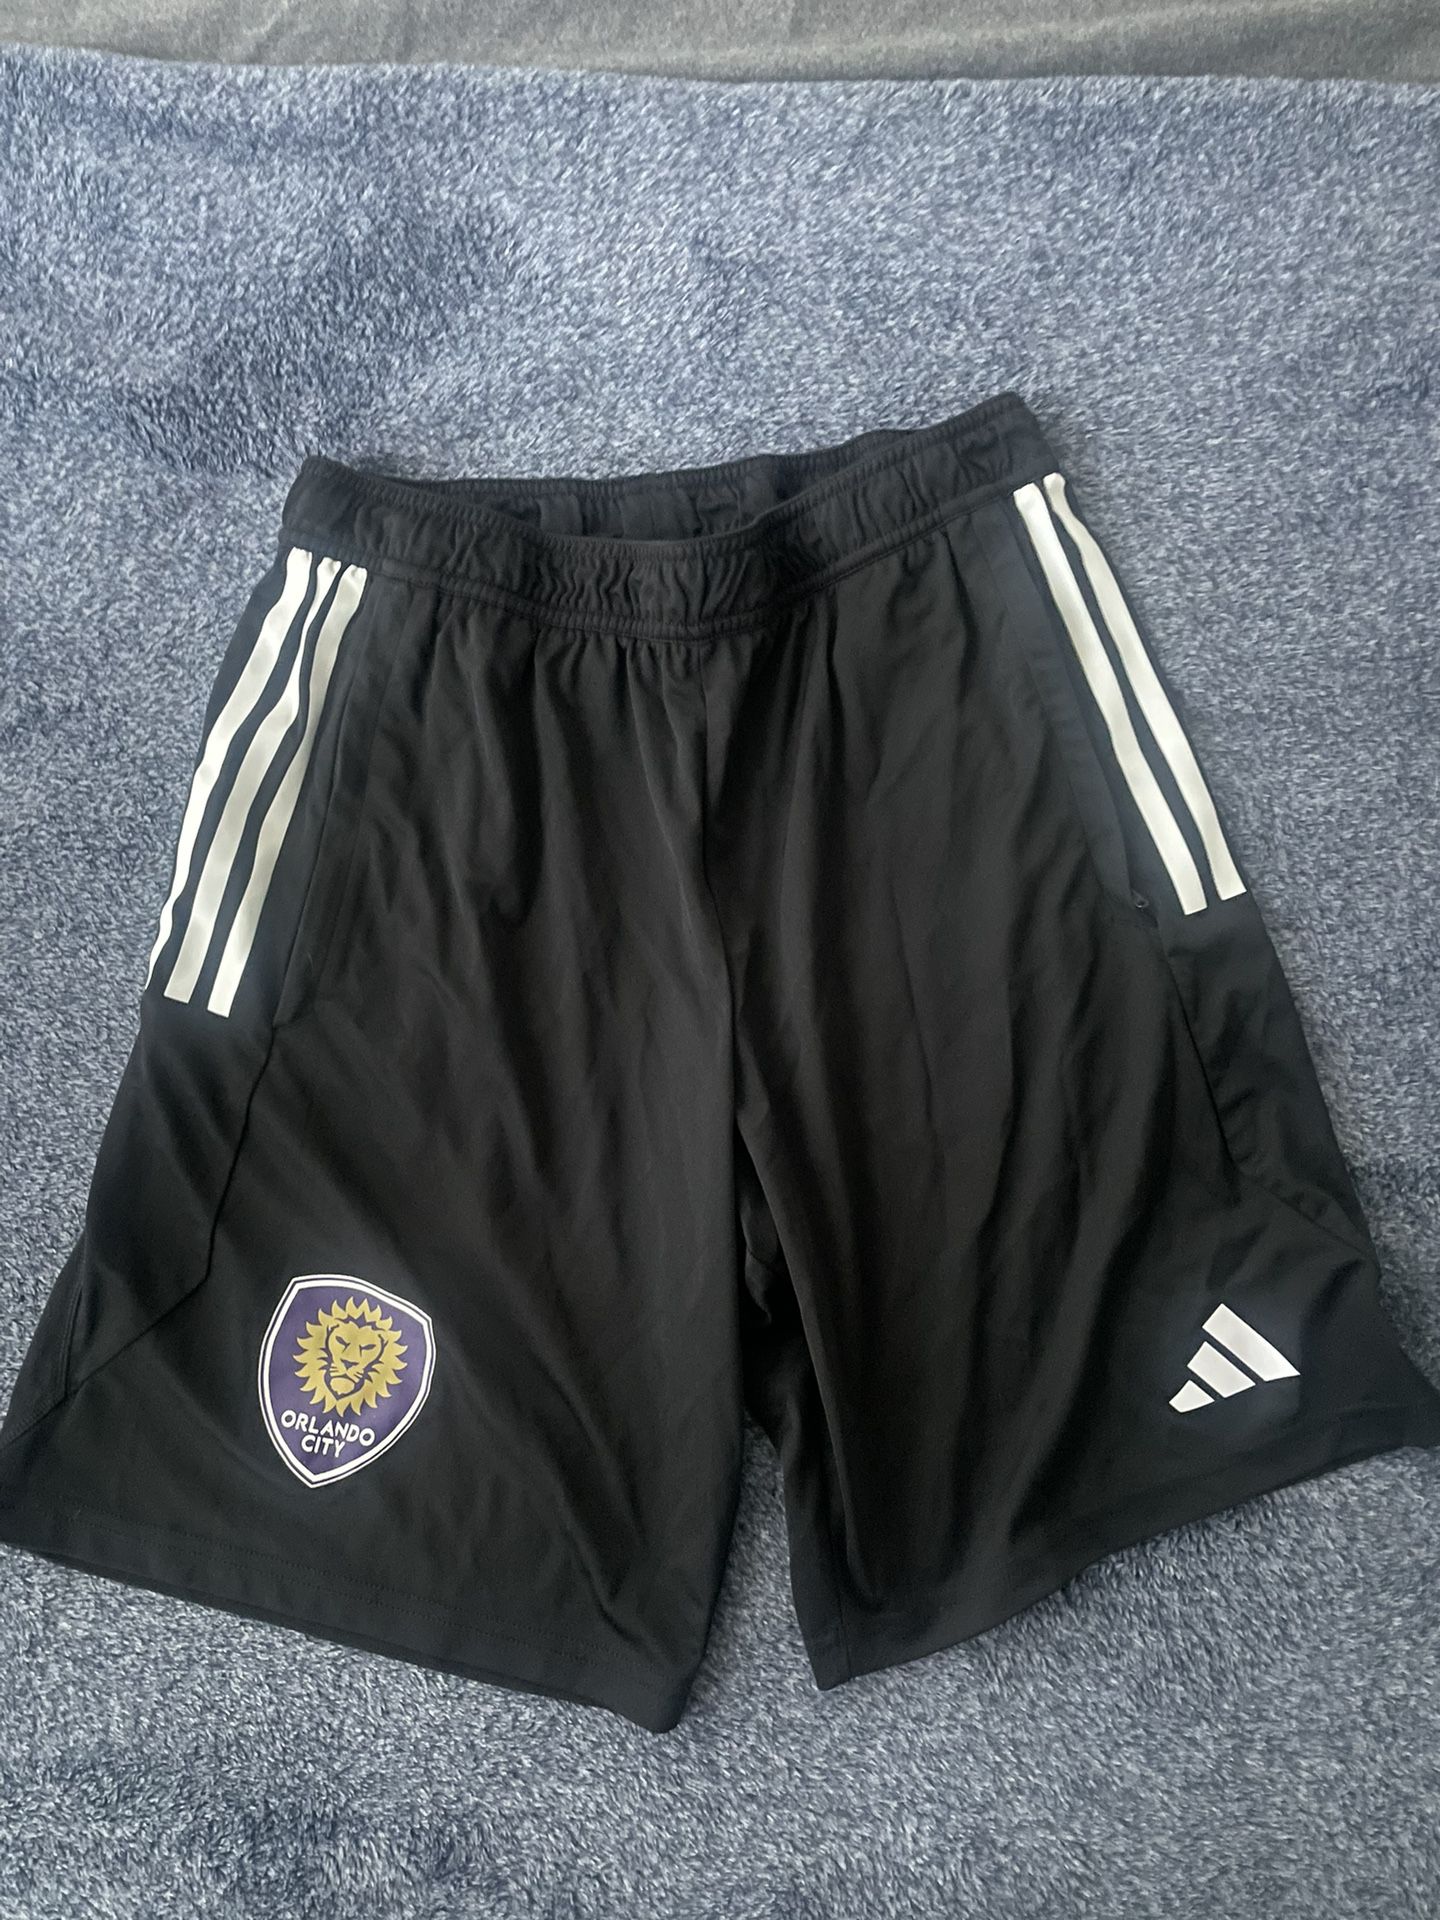 Orlando City Adidas Shorts 